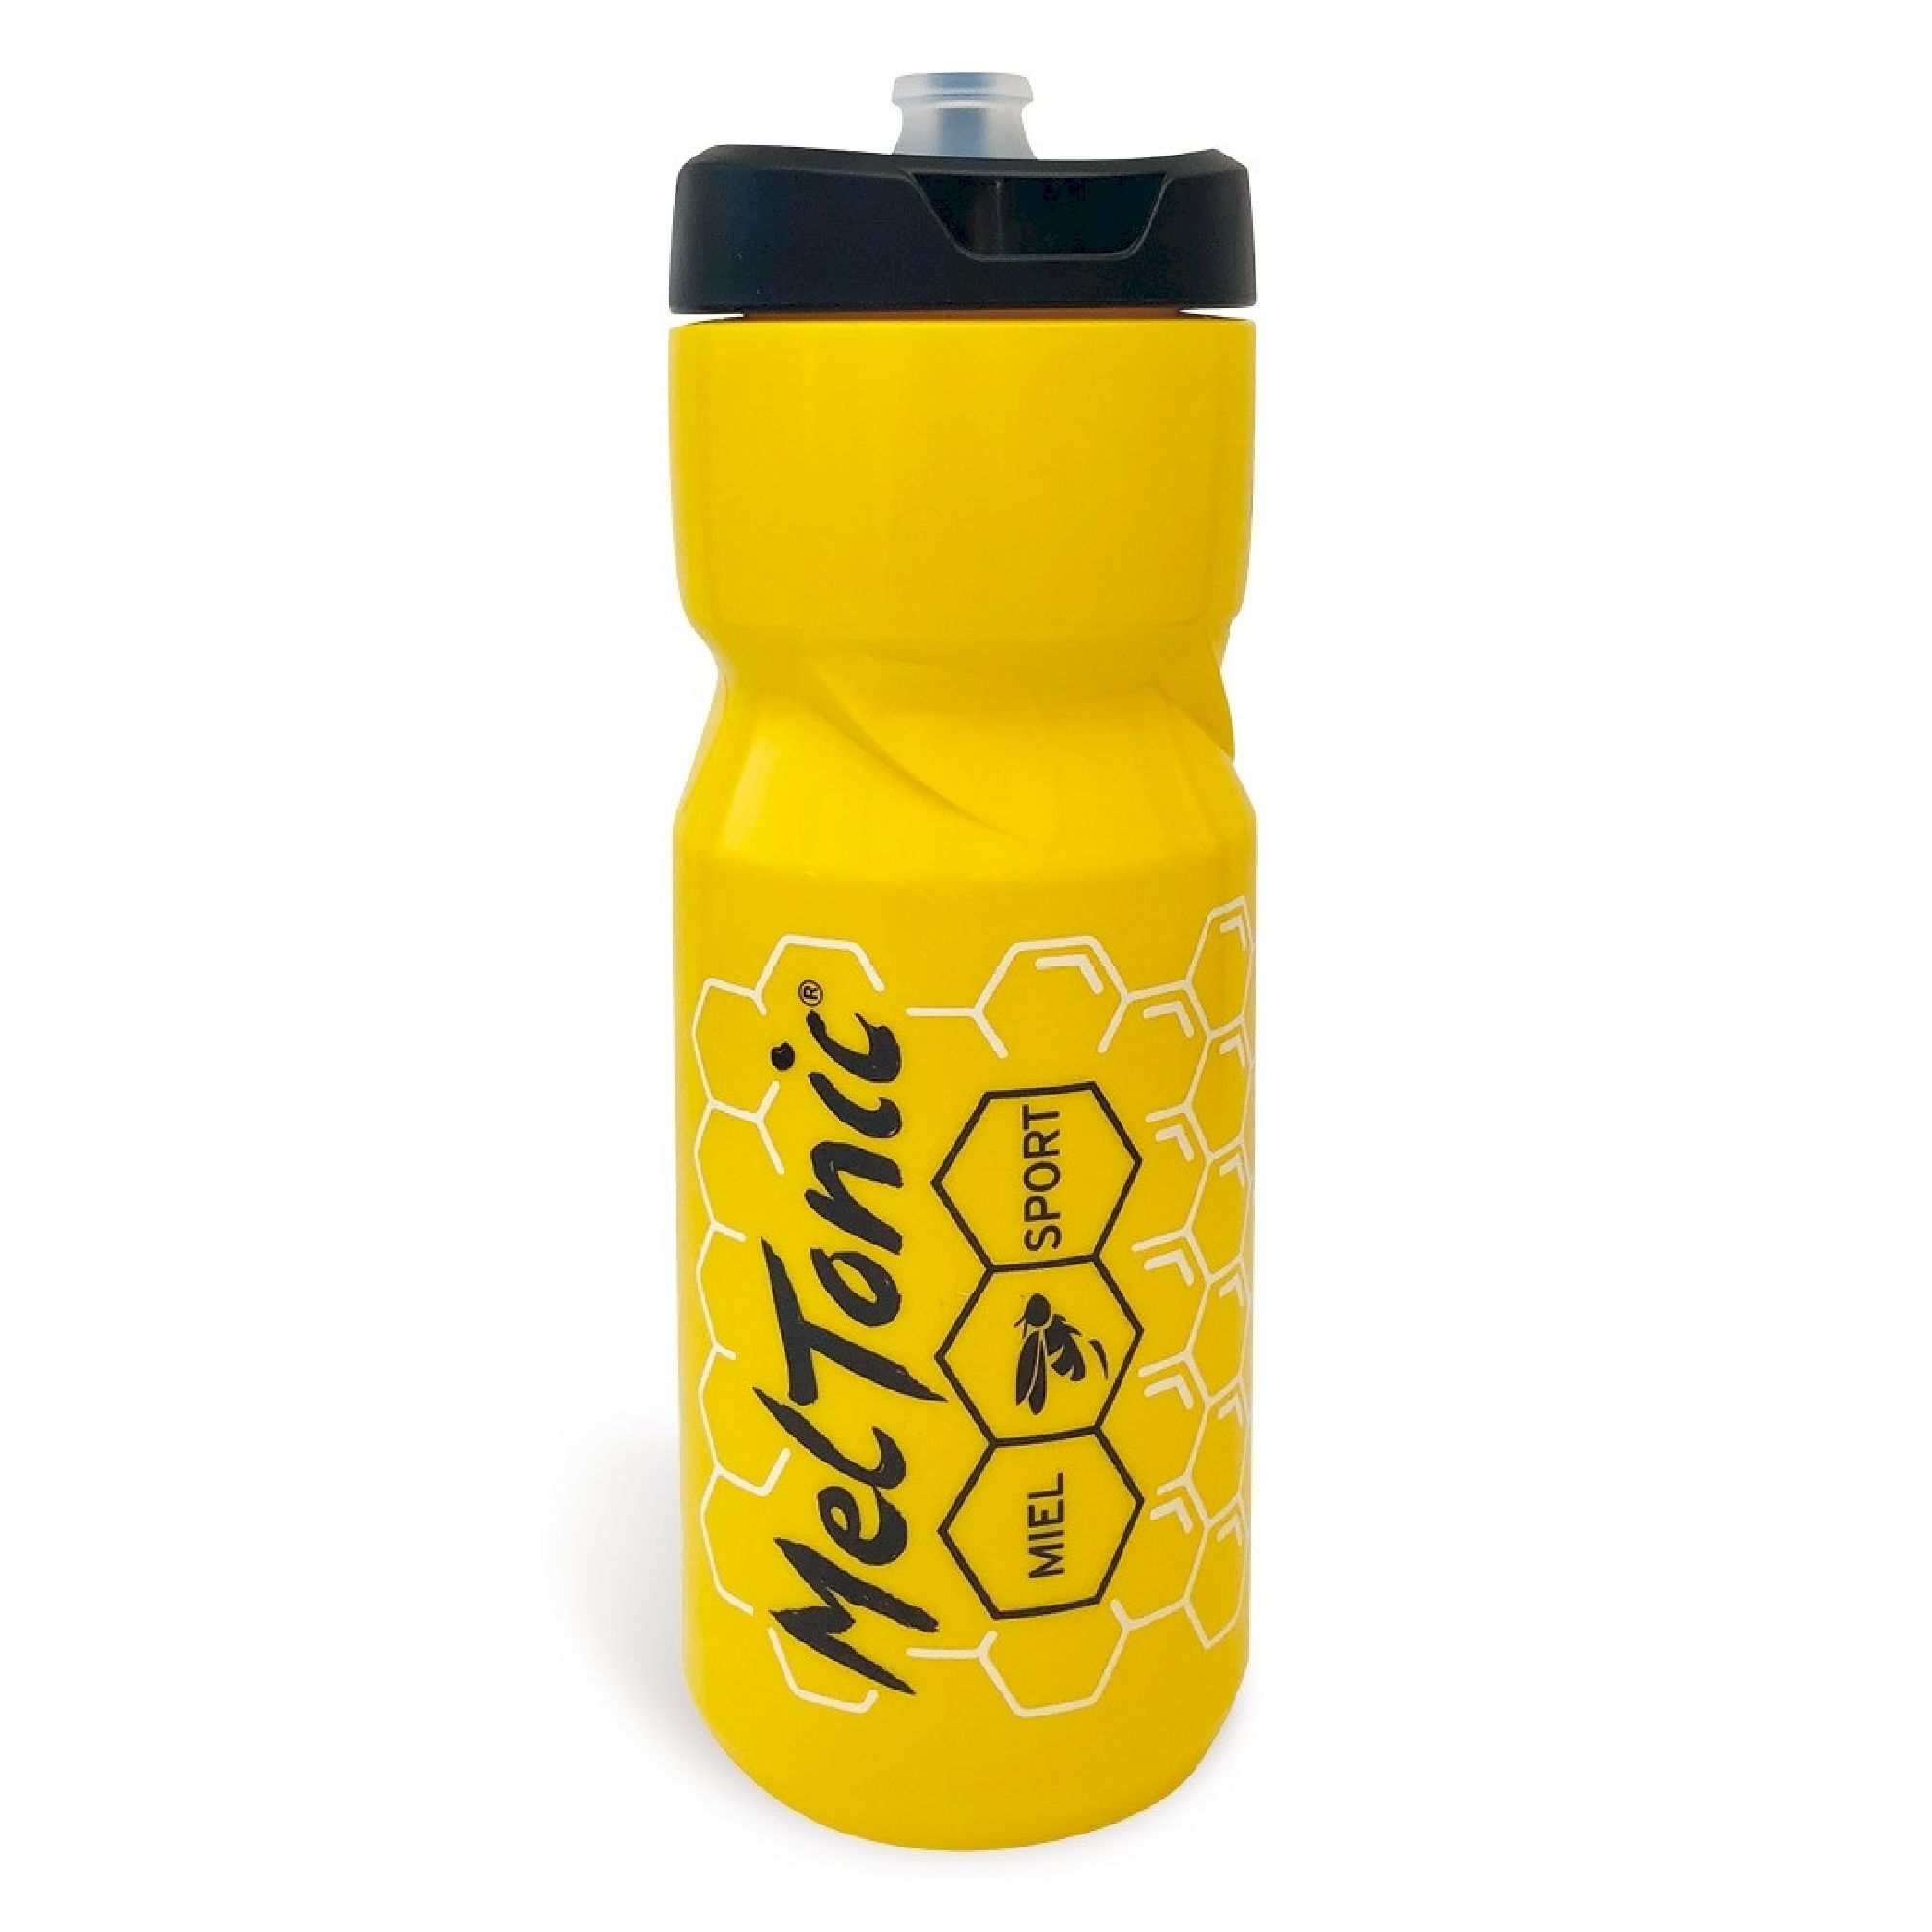 Meltonic Bidon 800 Ml - Water bottle